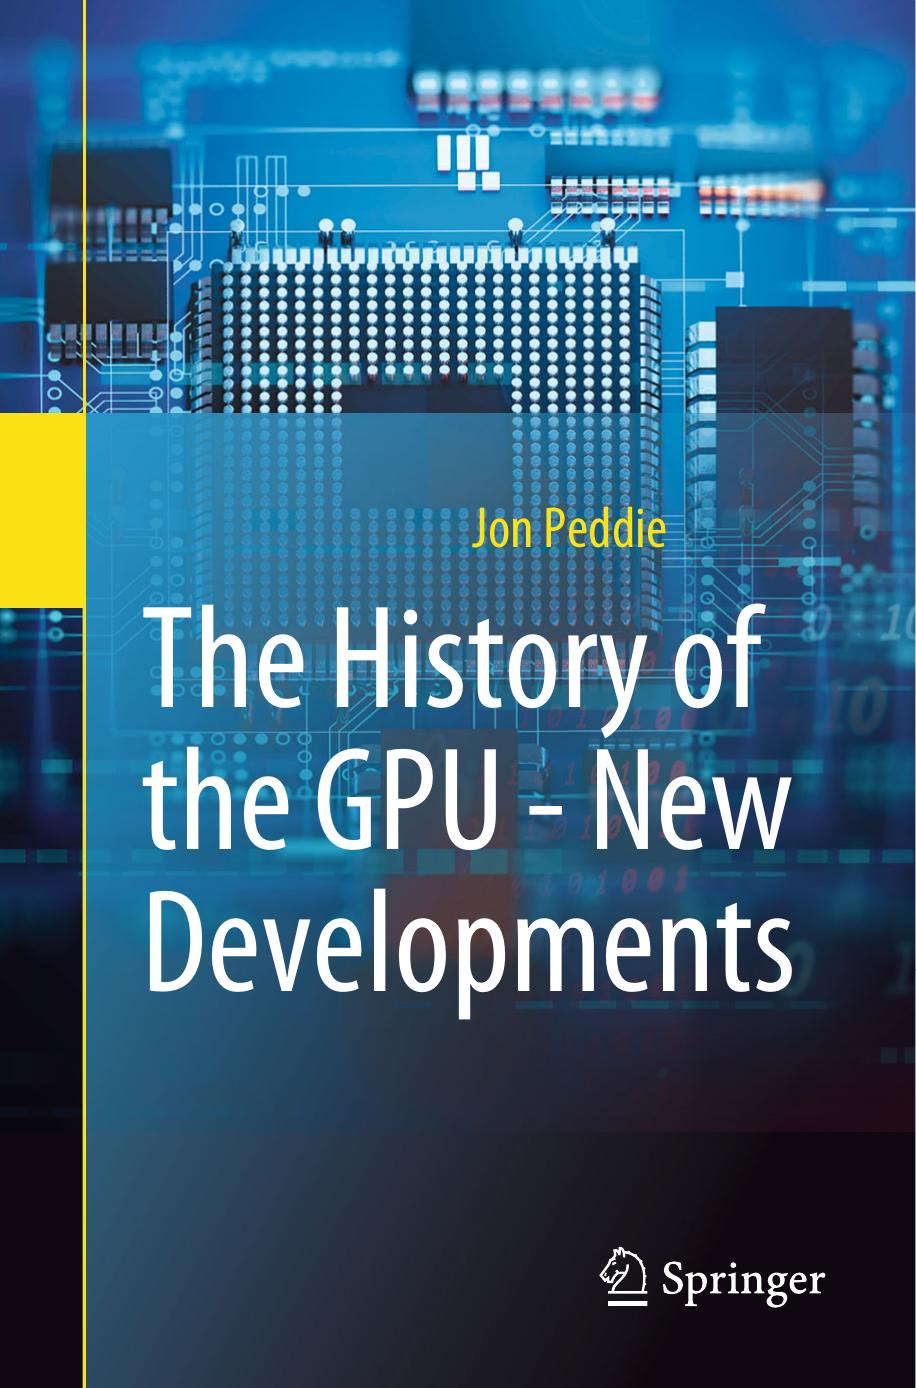 The History of the GPU - New Developments by Jon Peddie